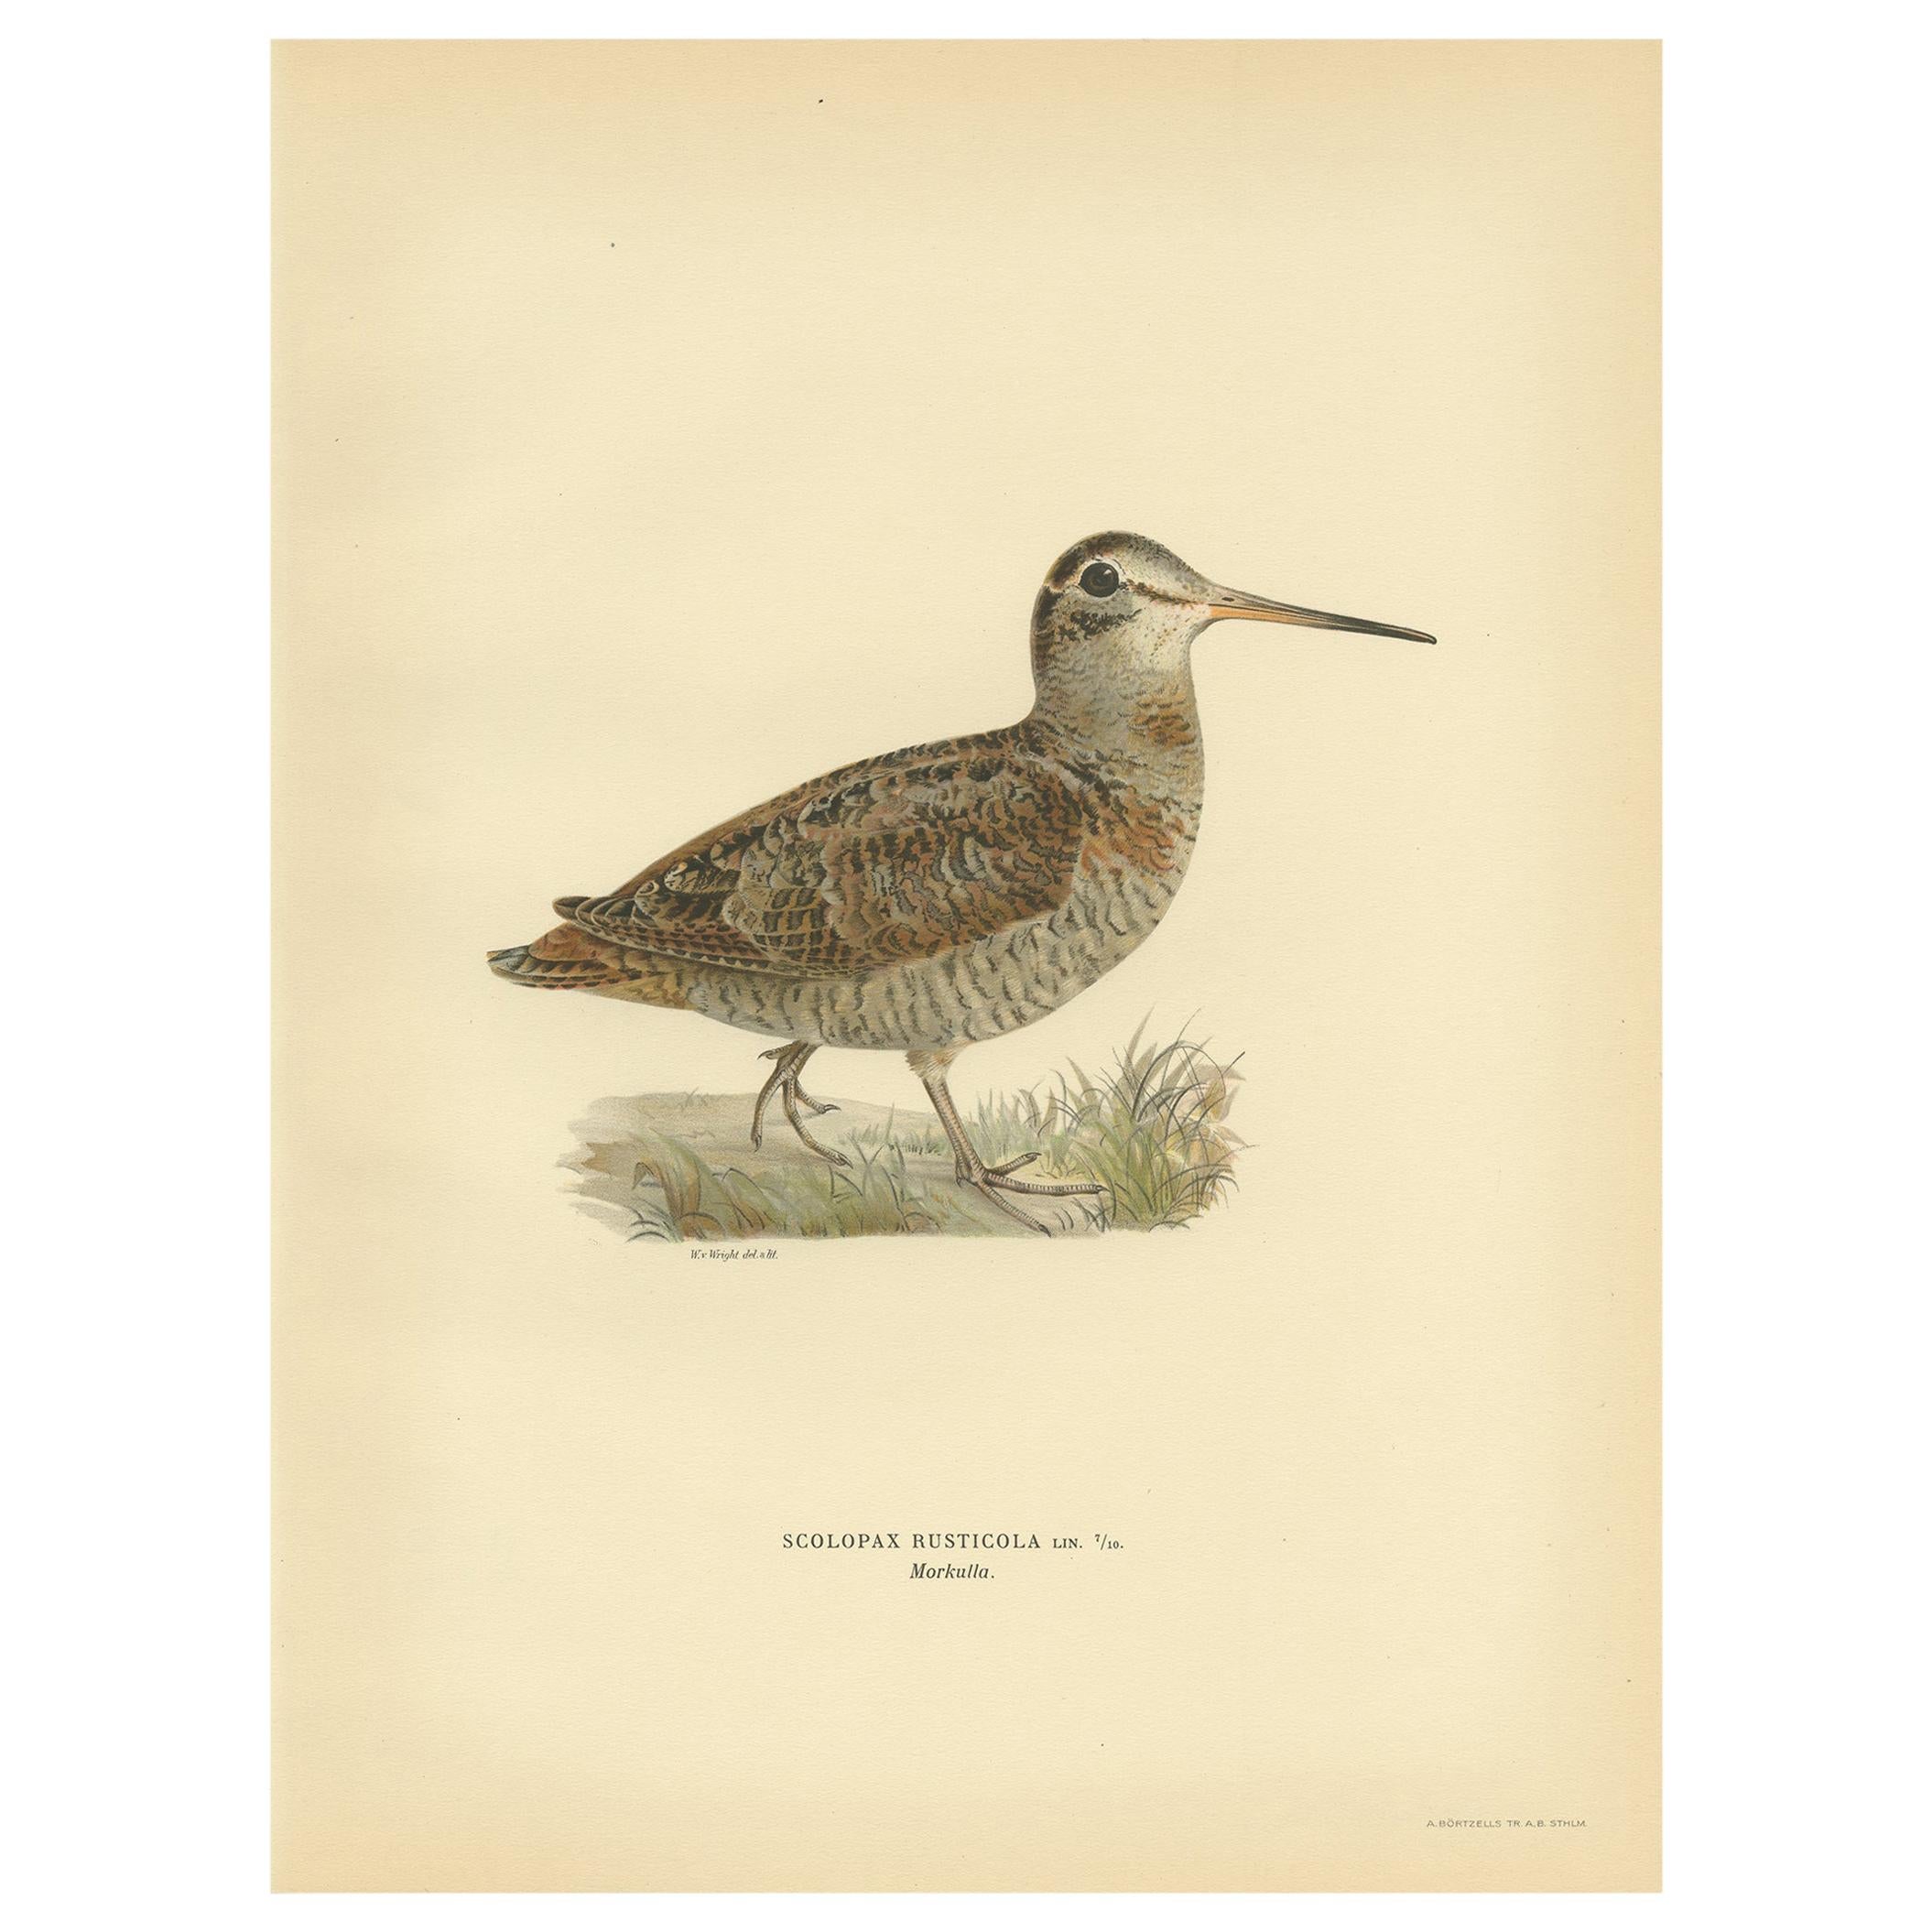 Antique Bird Print of the Eurasian Woodcock by Von Wright, 1929